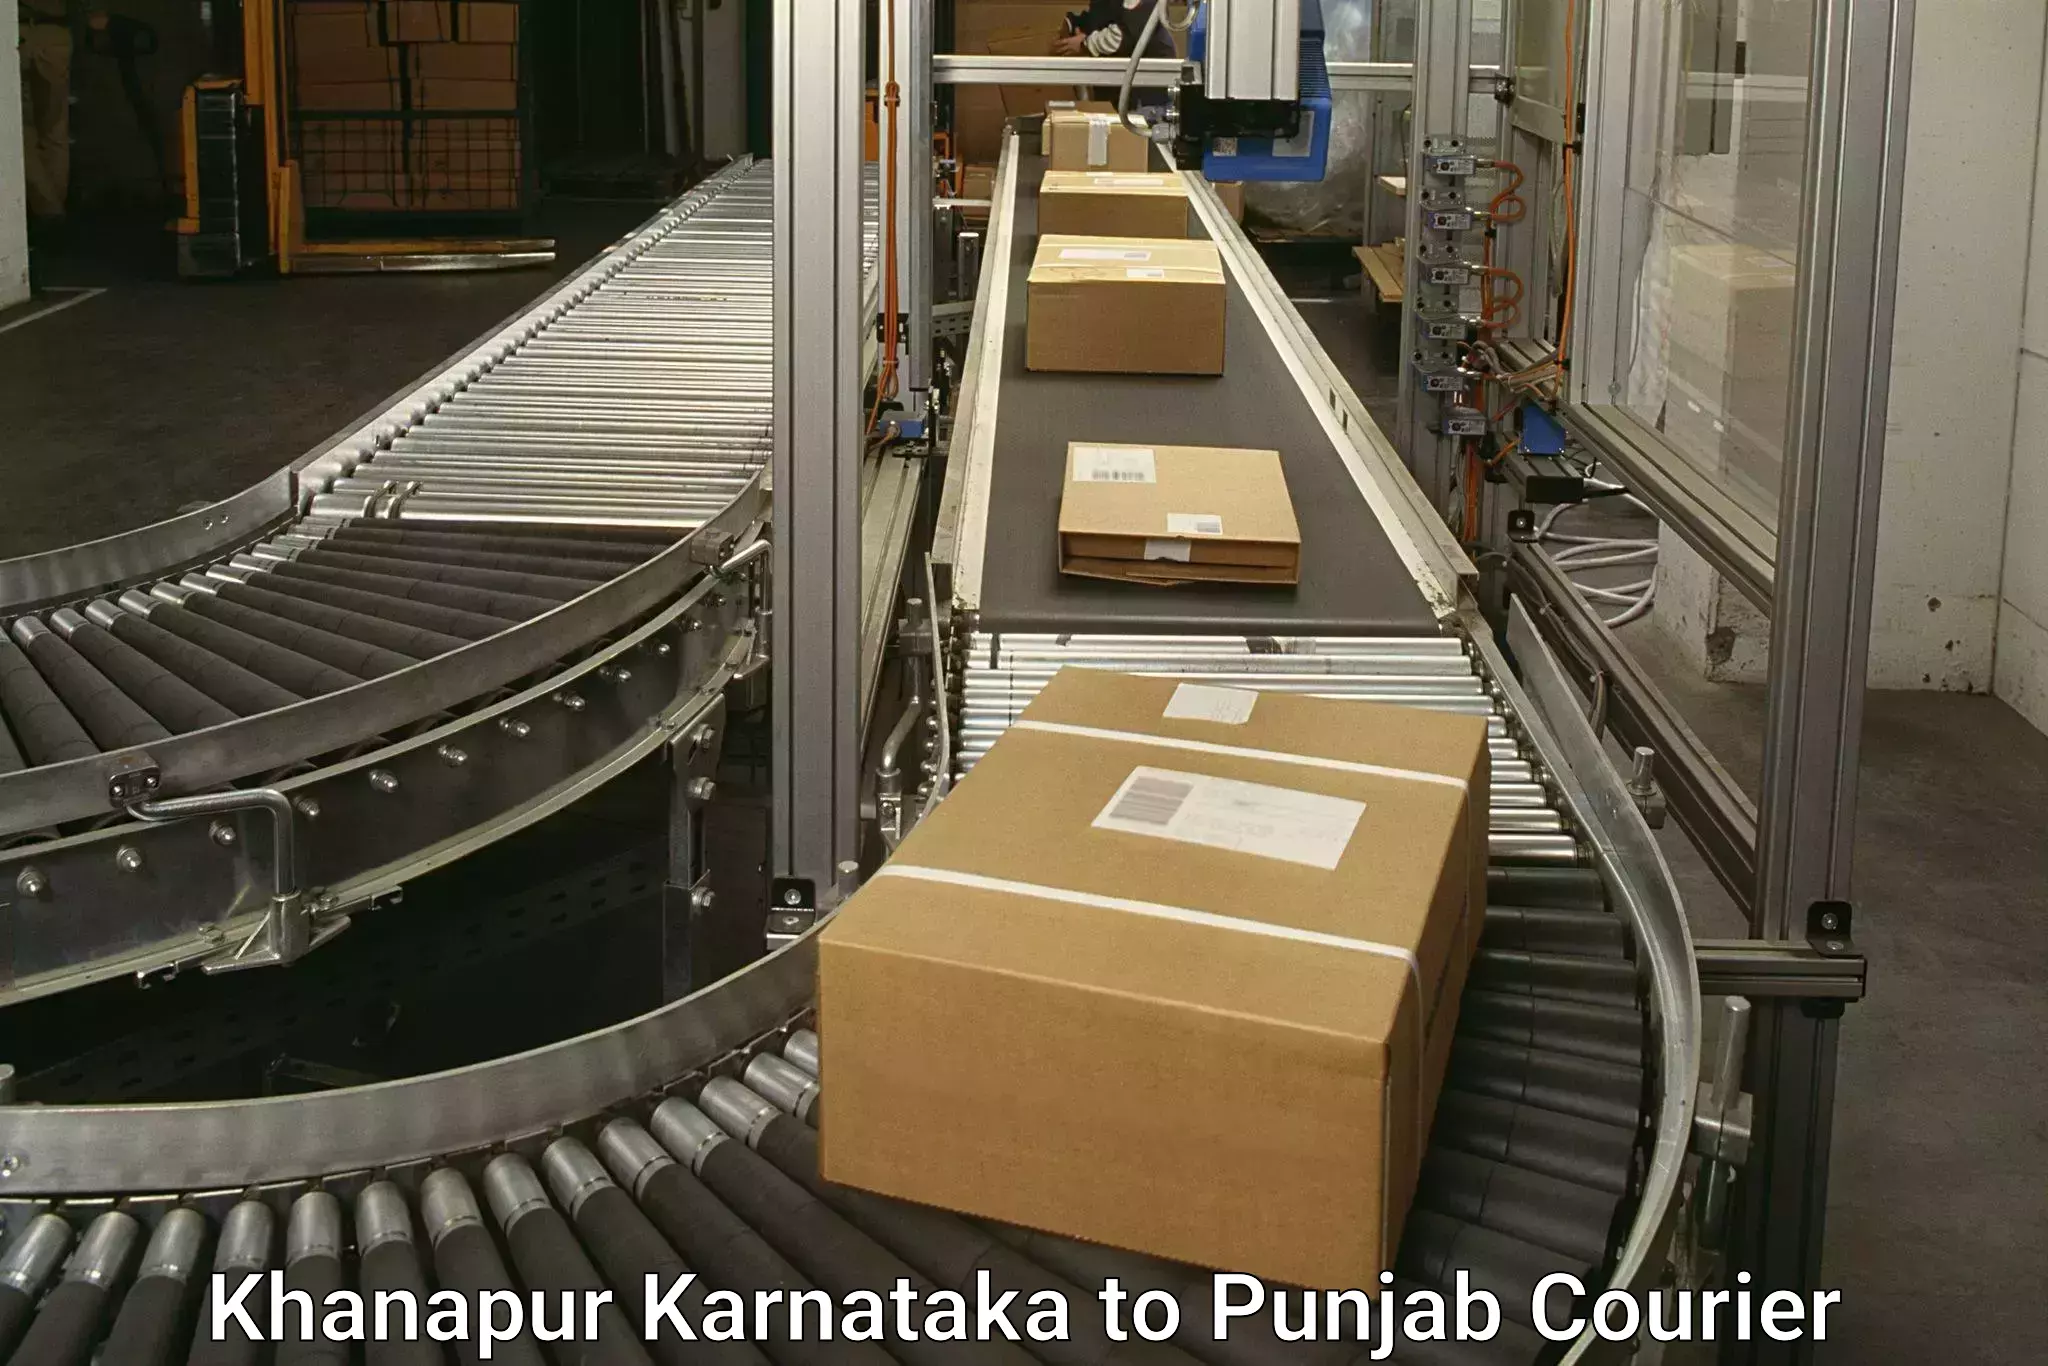 Global shipping solutions Khanapur Karnataka to Punjab